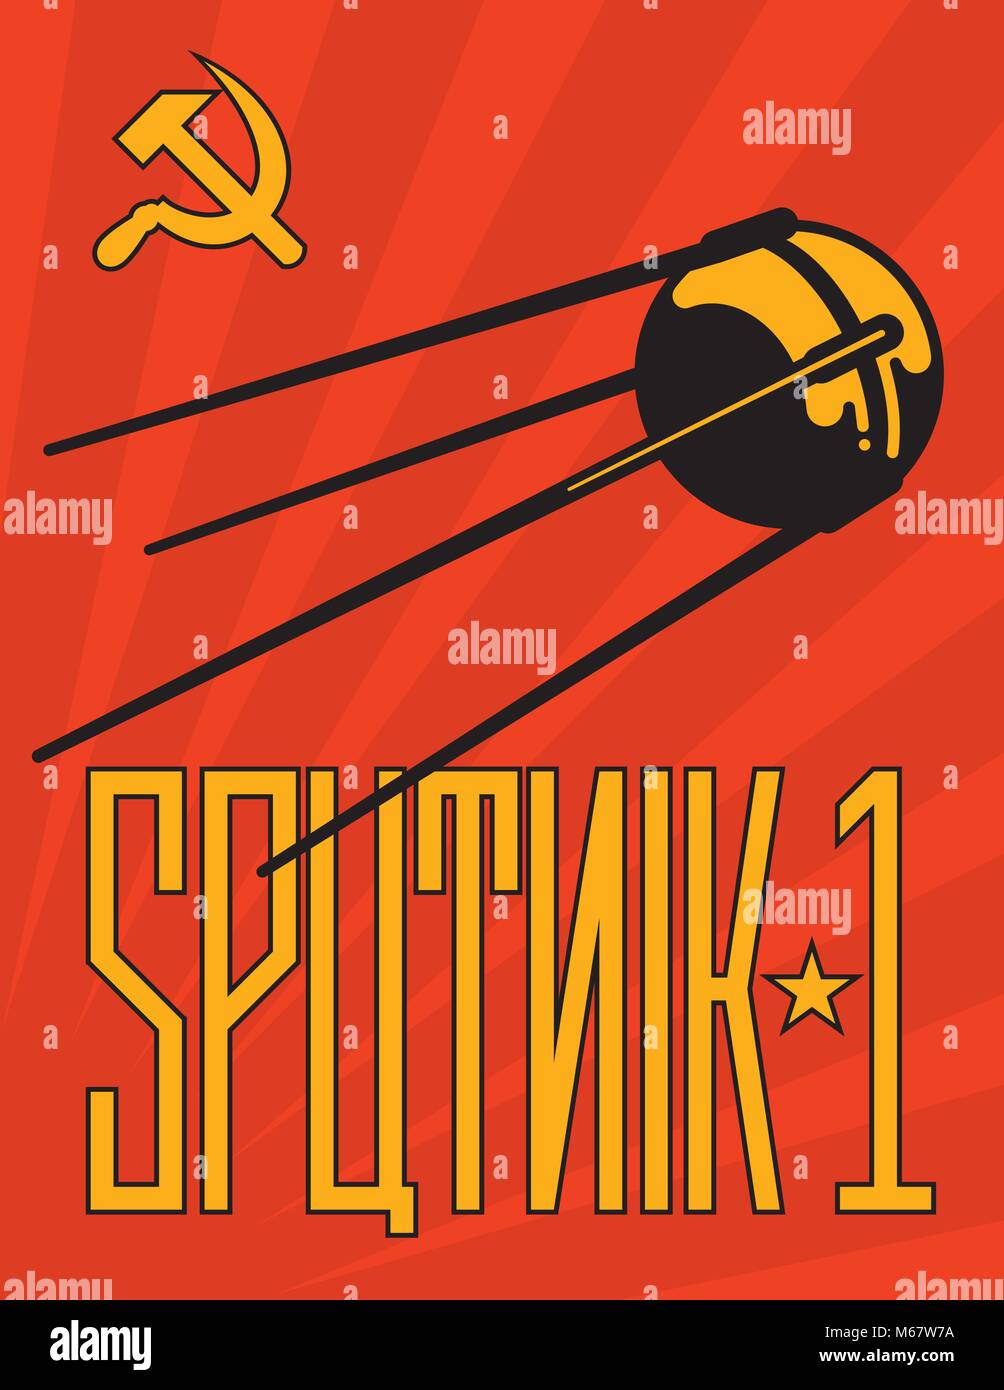 Retro Sputnik Satellite Vector Design. Vintage style Russian Sputnik 1 propaganda style poster design with cyrillic alphabet style lettering. Stock Vector